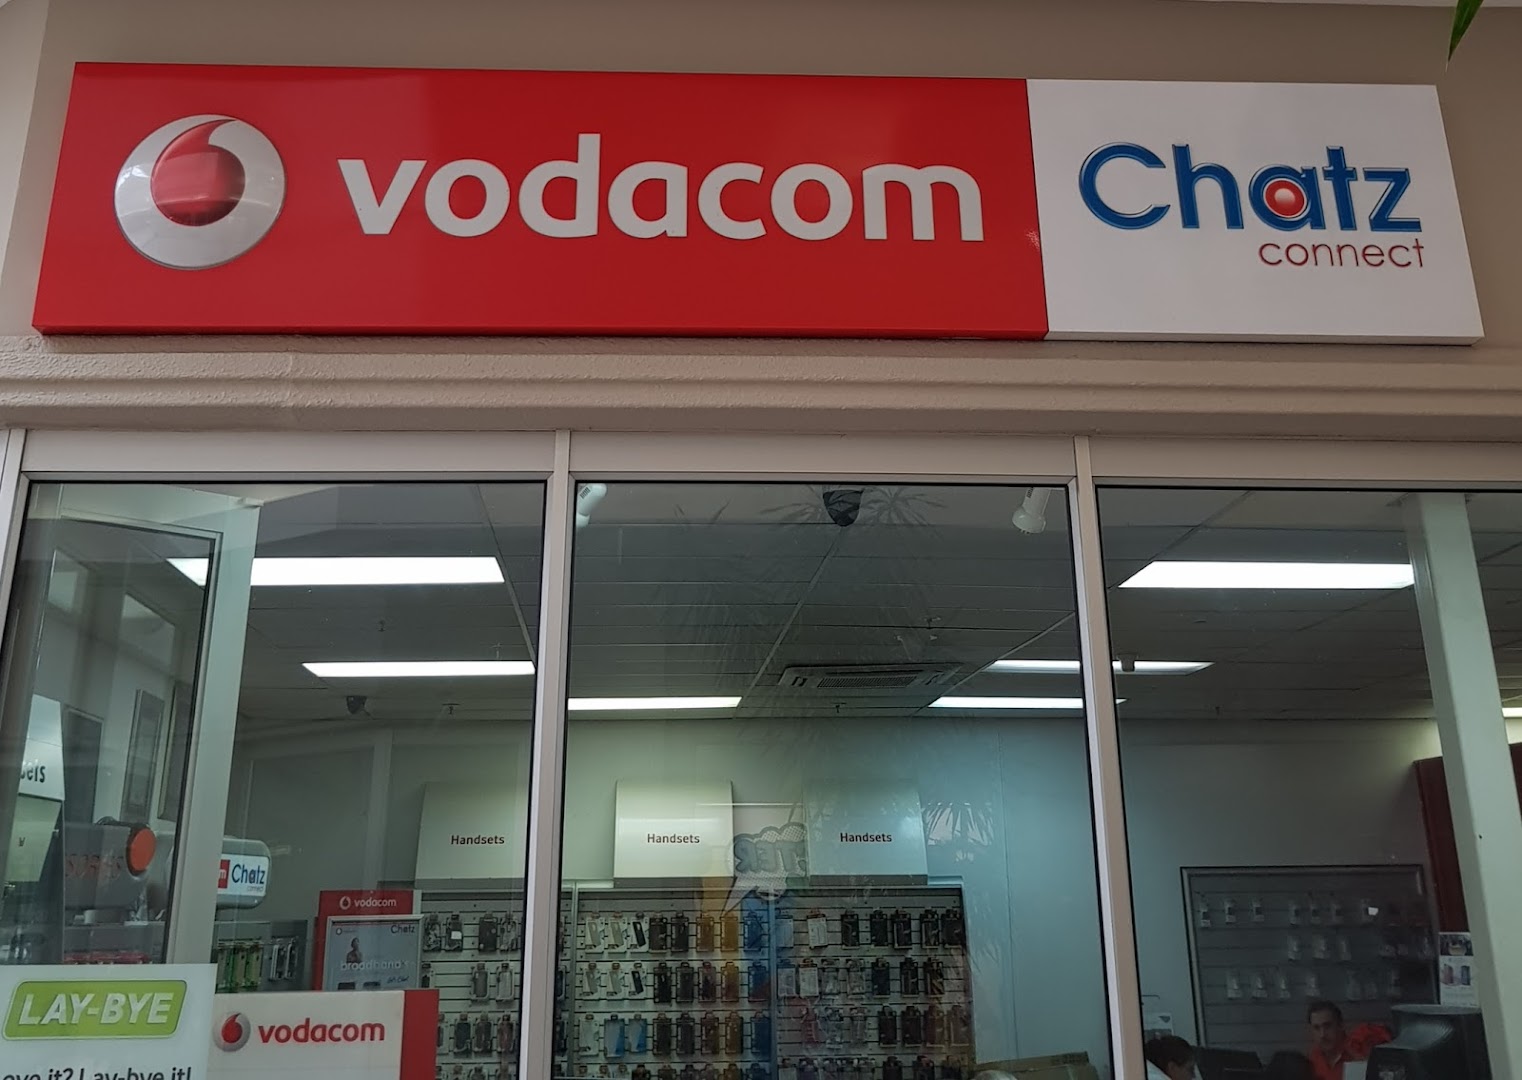 Vodacom Chatz Connect Mayville